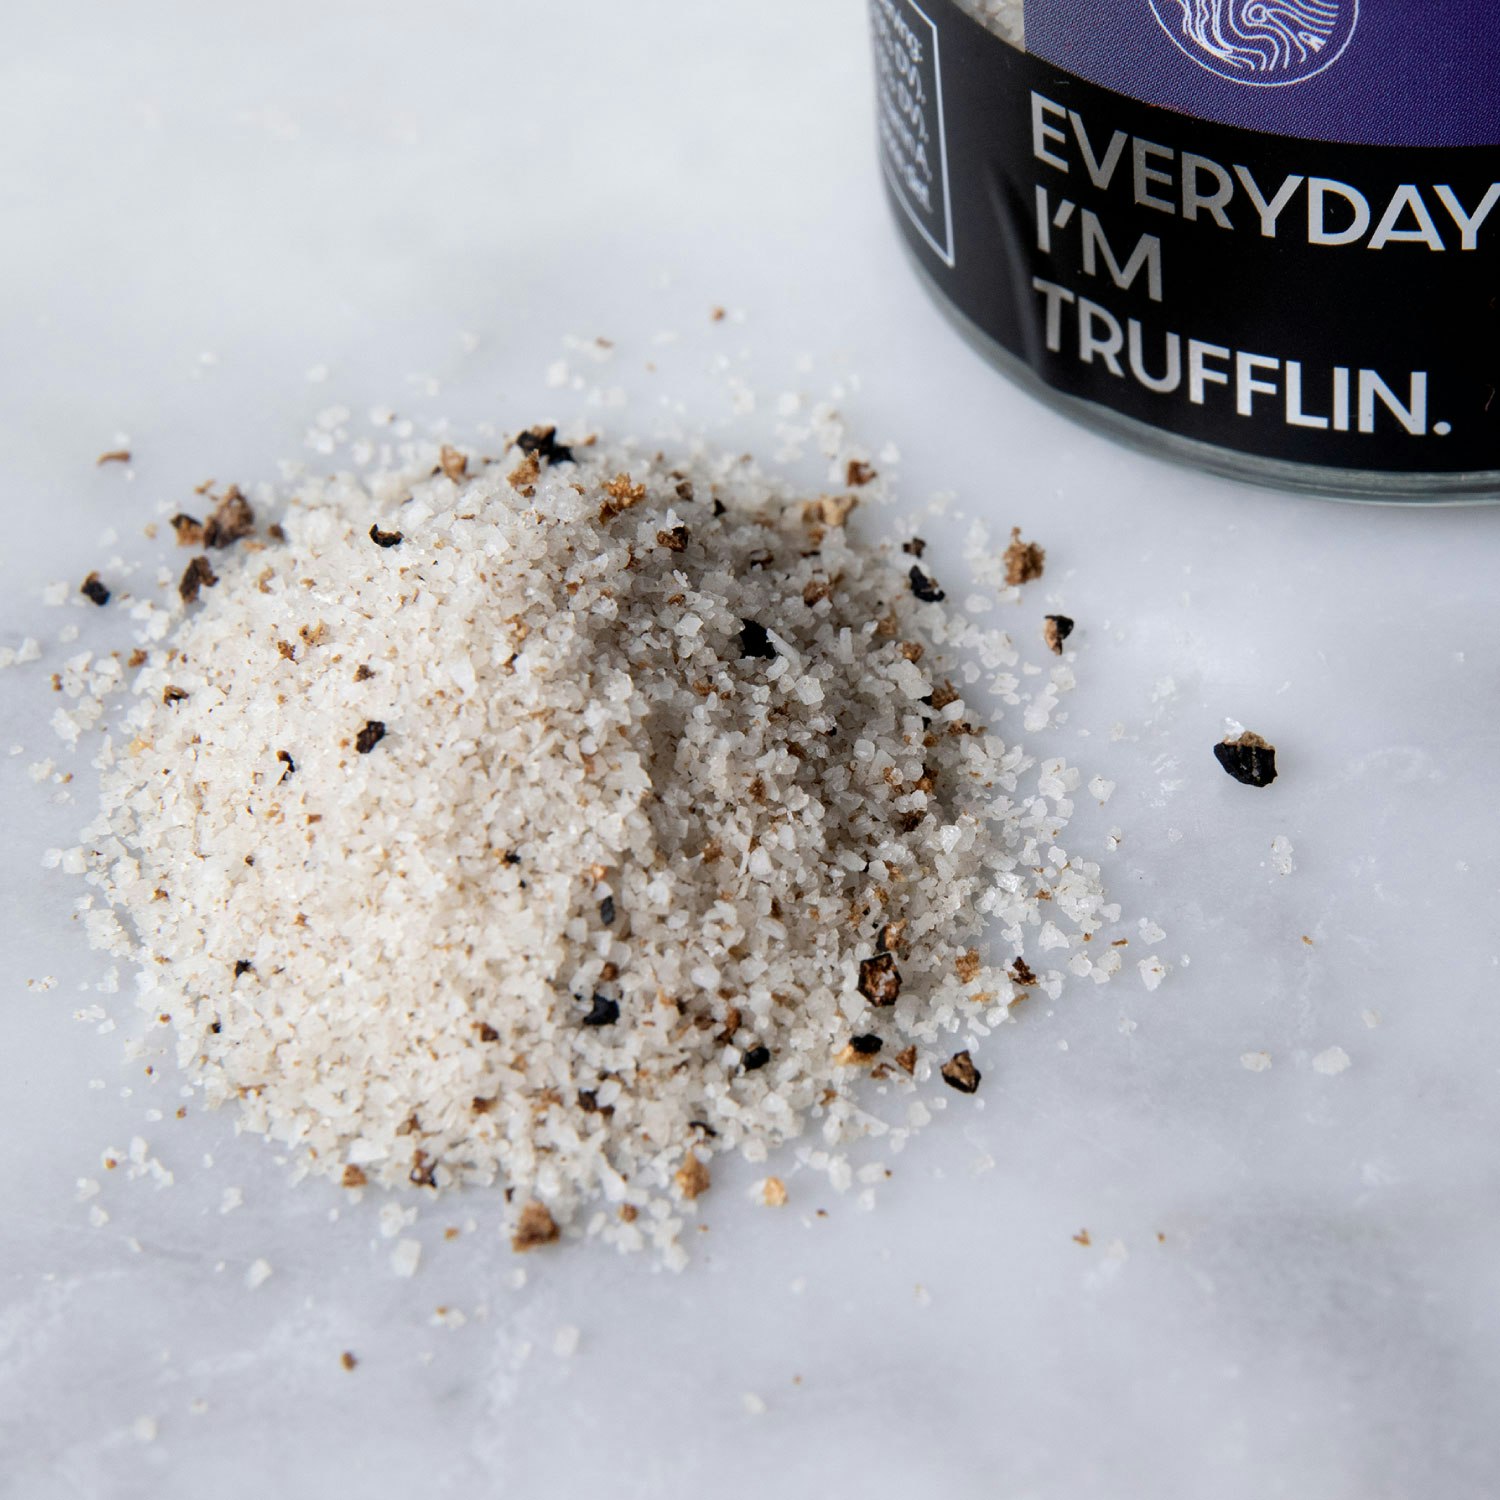 Trufflin® Black Truffle Salt 100g